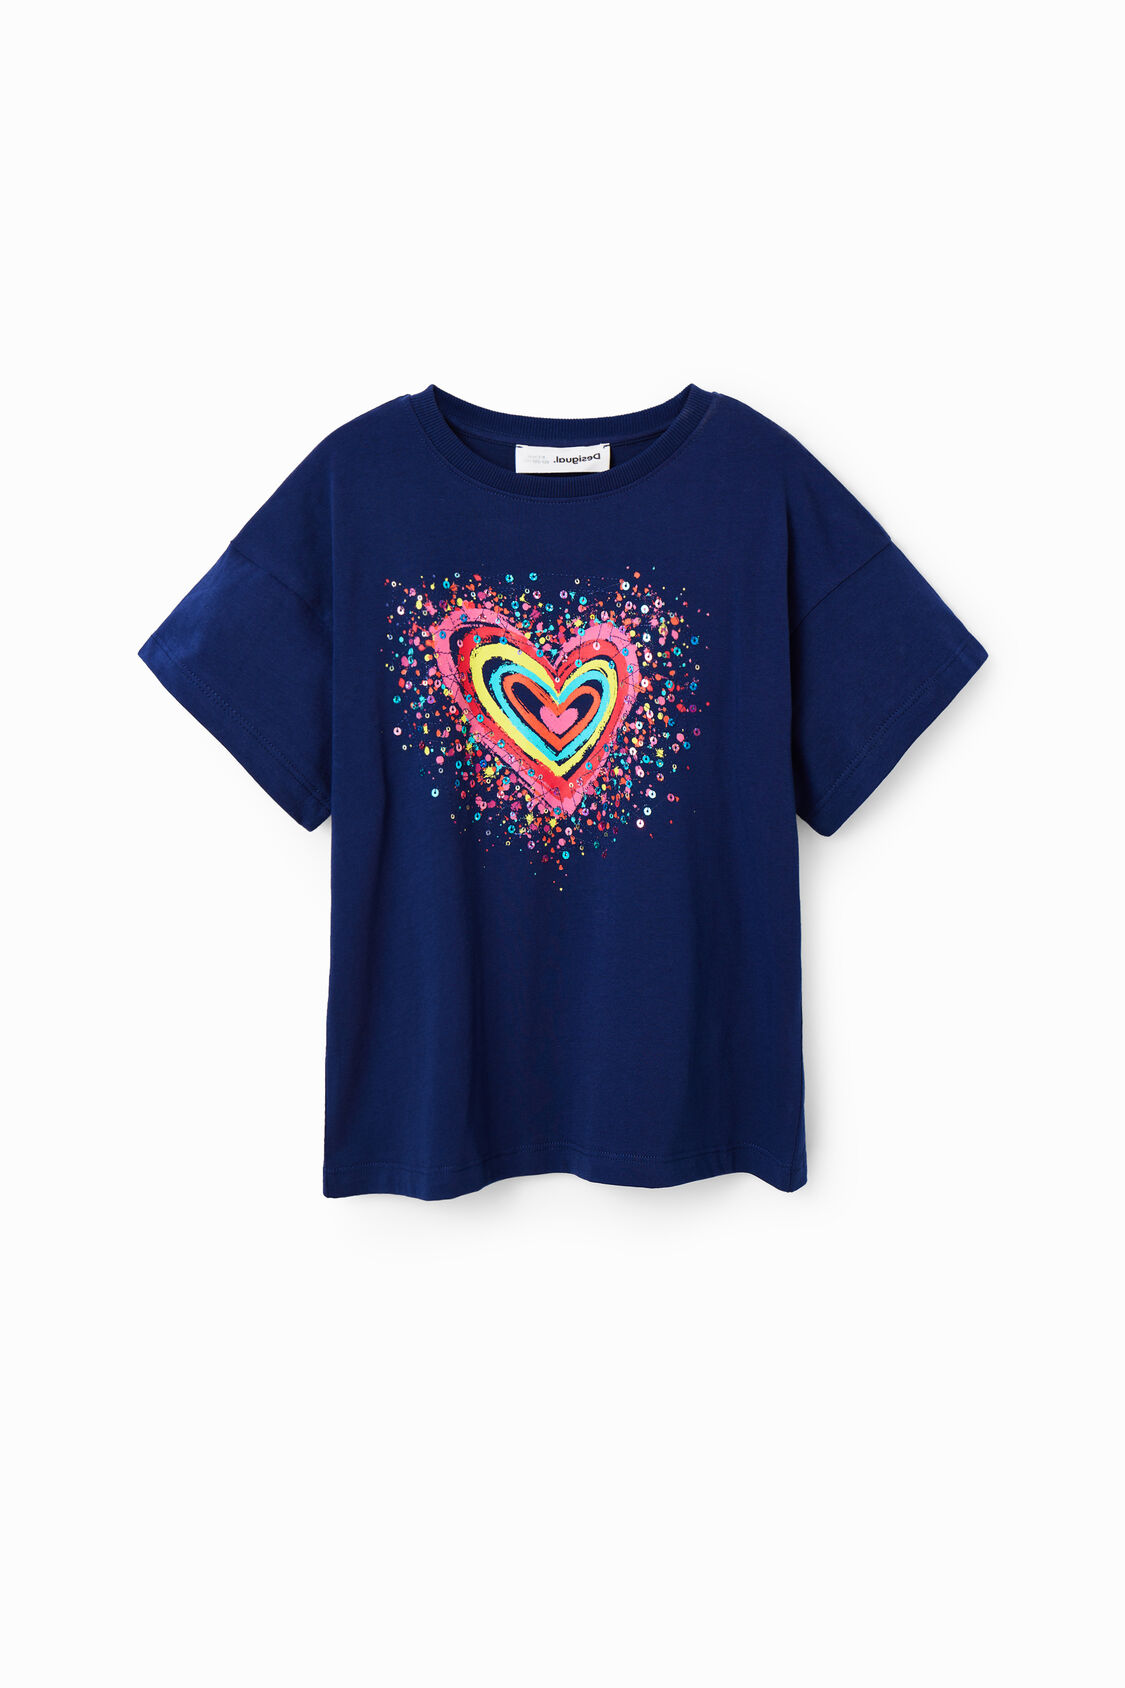 Incesante Sedante entrega a domicilio Camiseta corazón lentejuelas de niña I Desigual.com